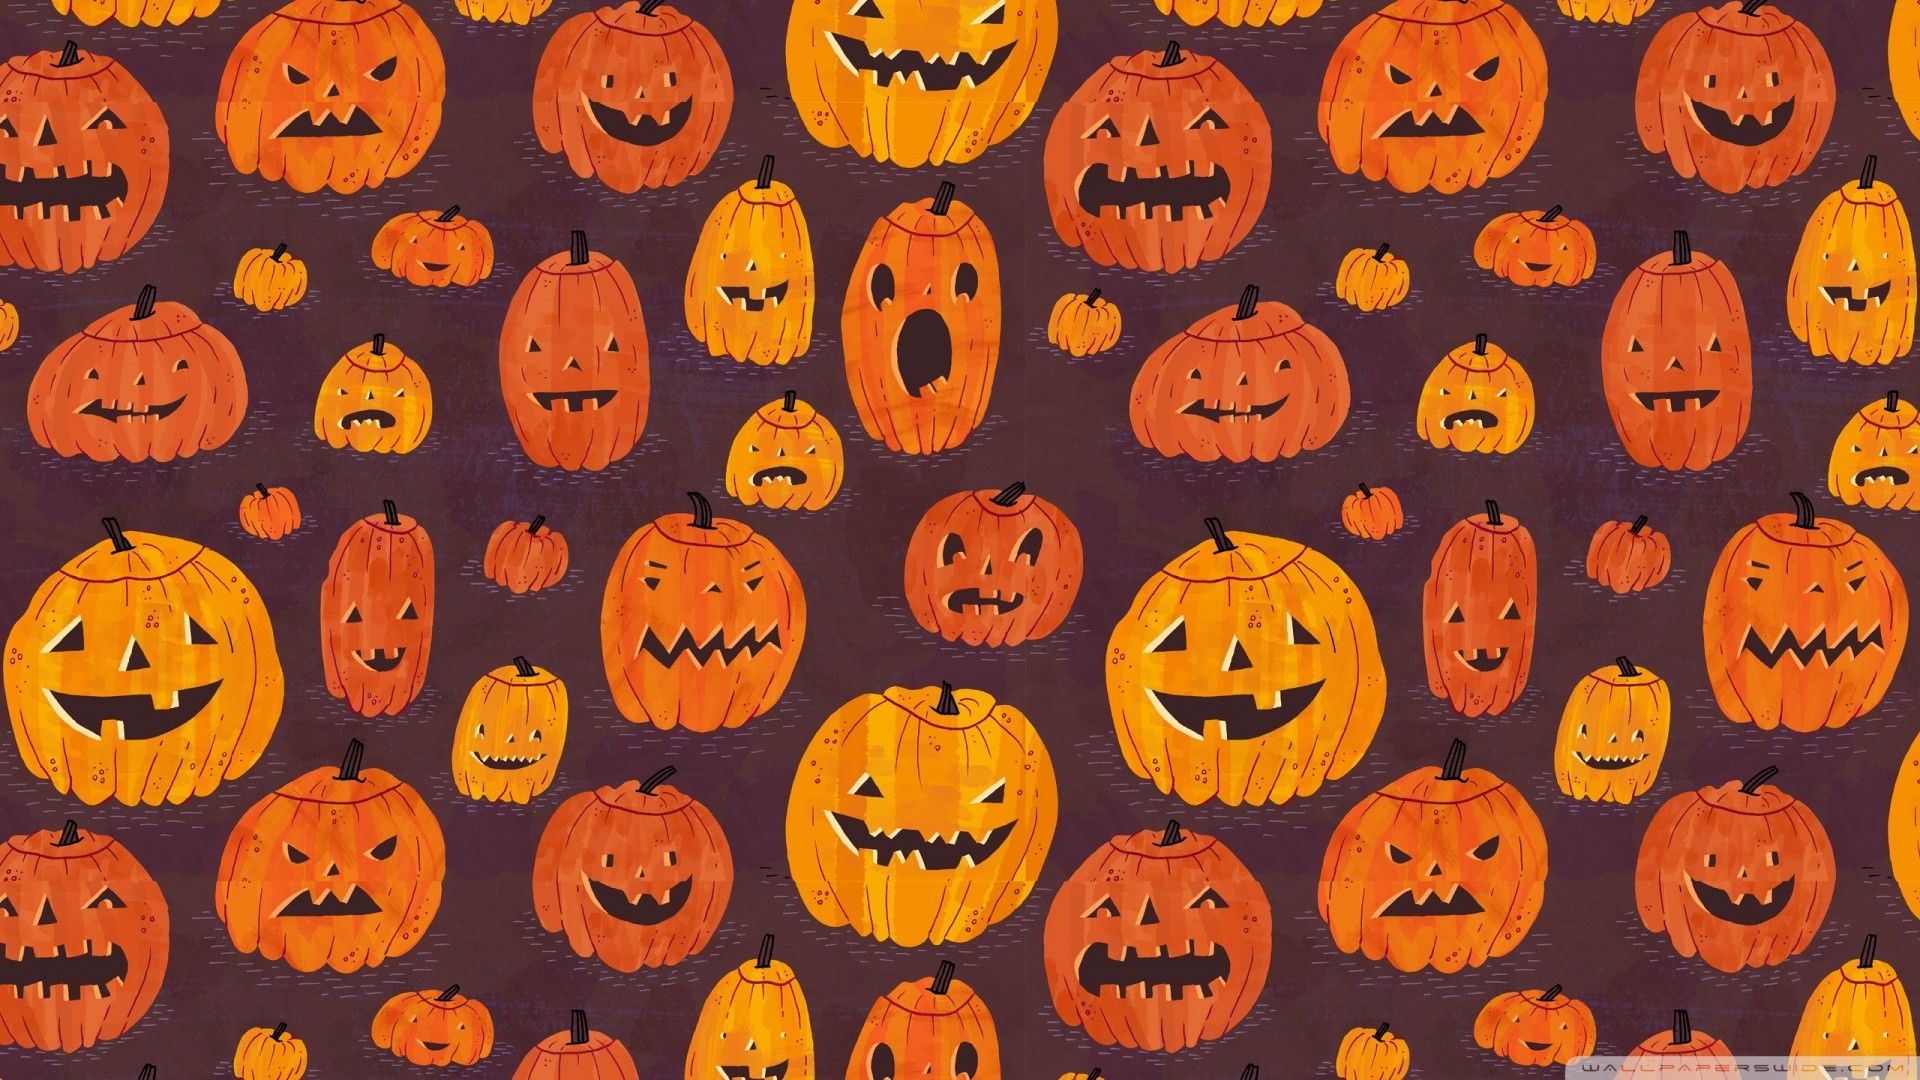 1920x1080 2920x2160 Charlie Brown Halloween Wallpapers - HD Wallpapers Inn